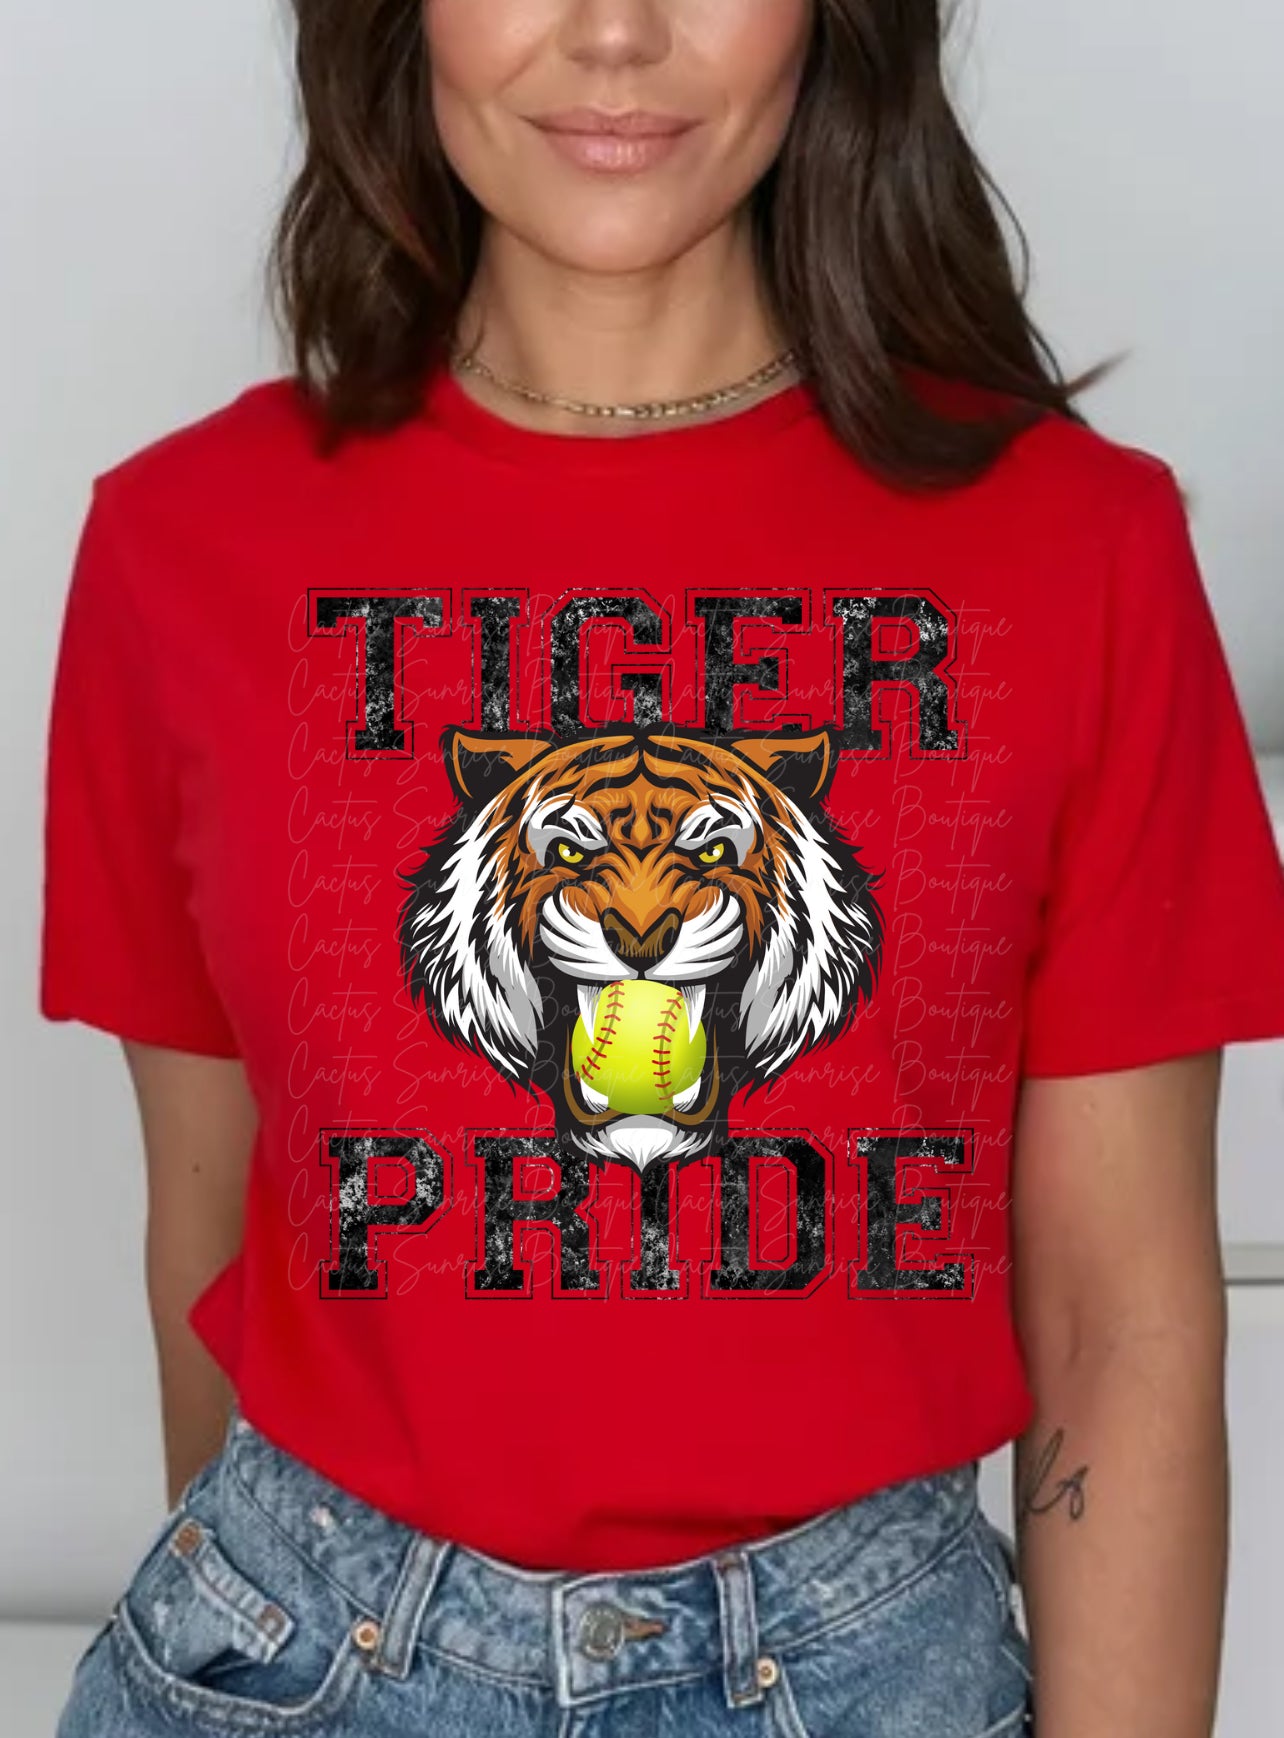 Tiger Pride Softball